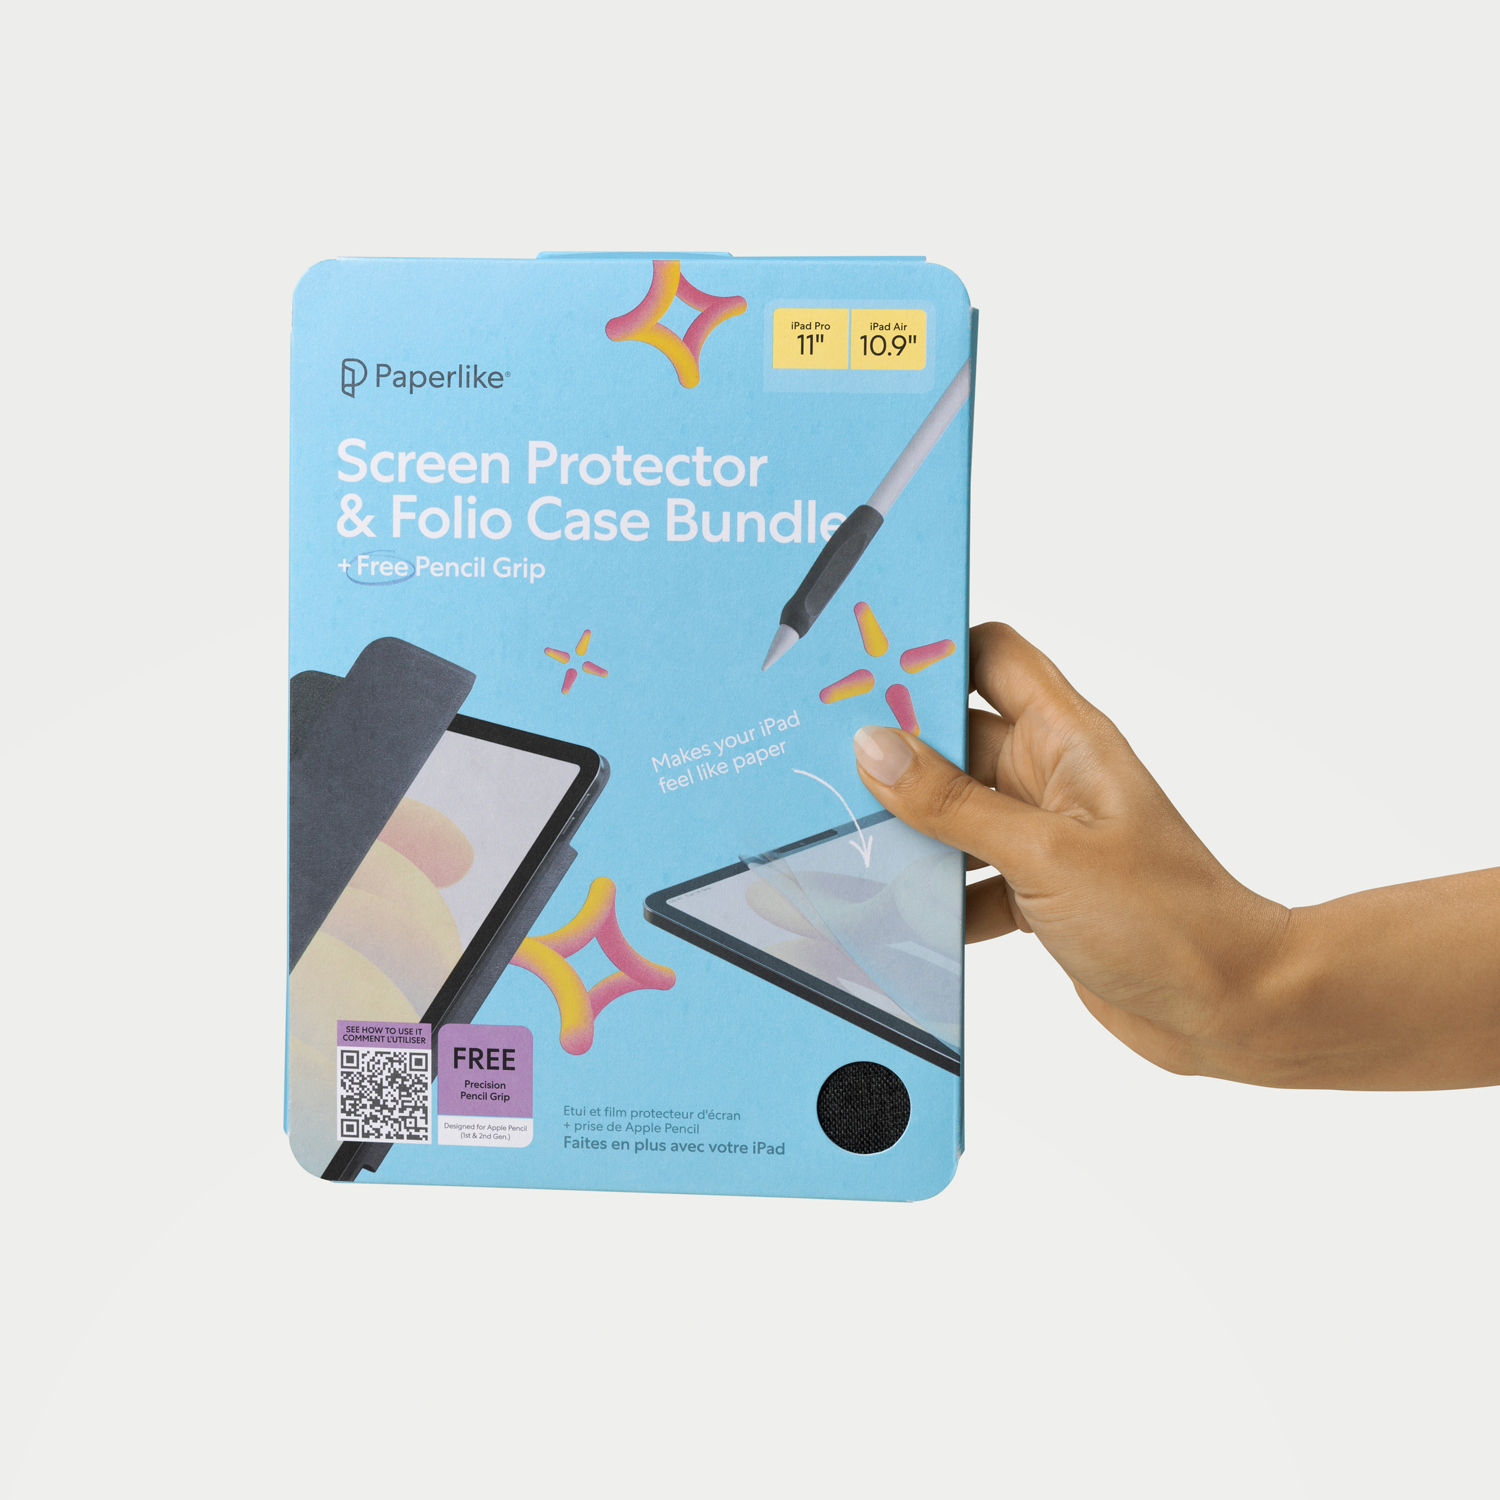 Paperlike Screen Protector + Folio Bundle - all-in-one professional iPad kit